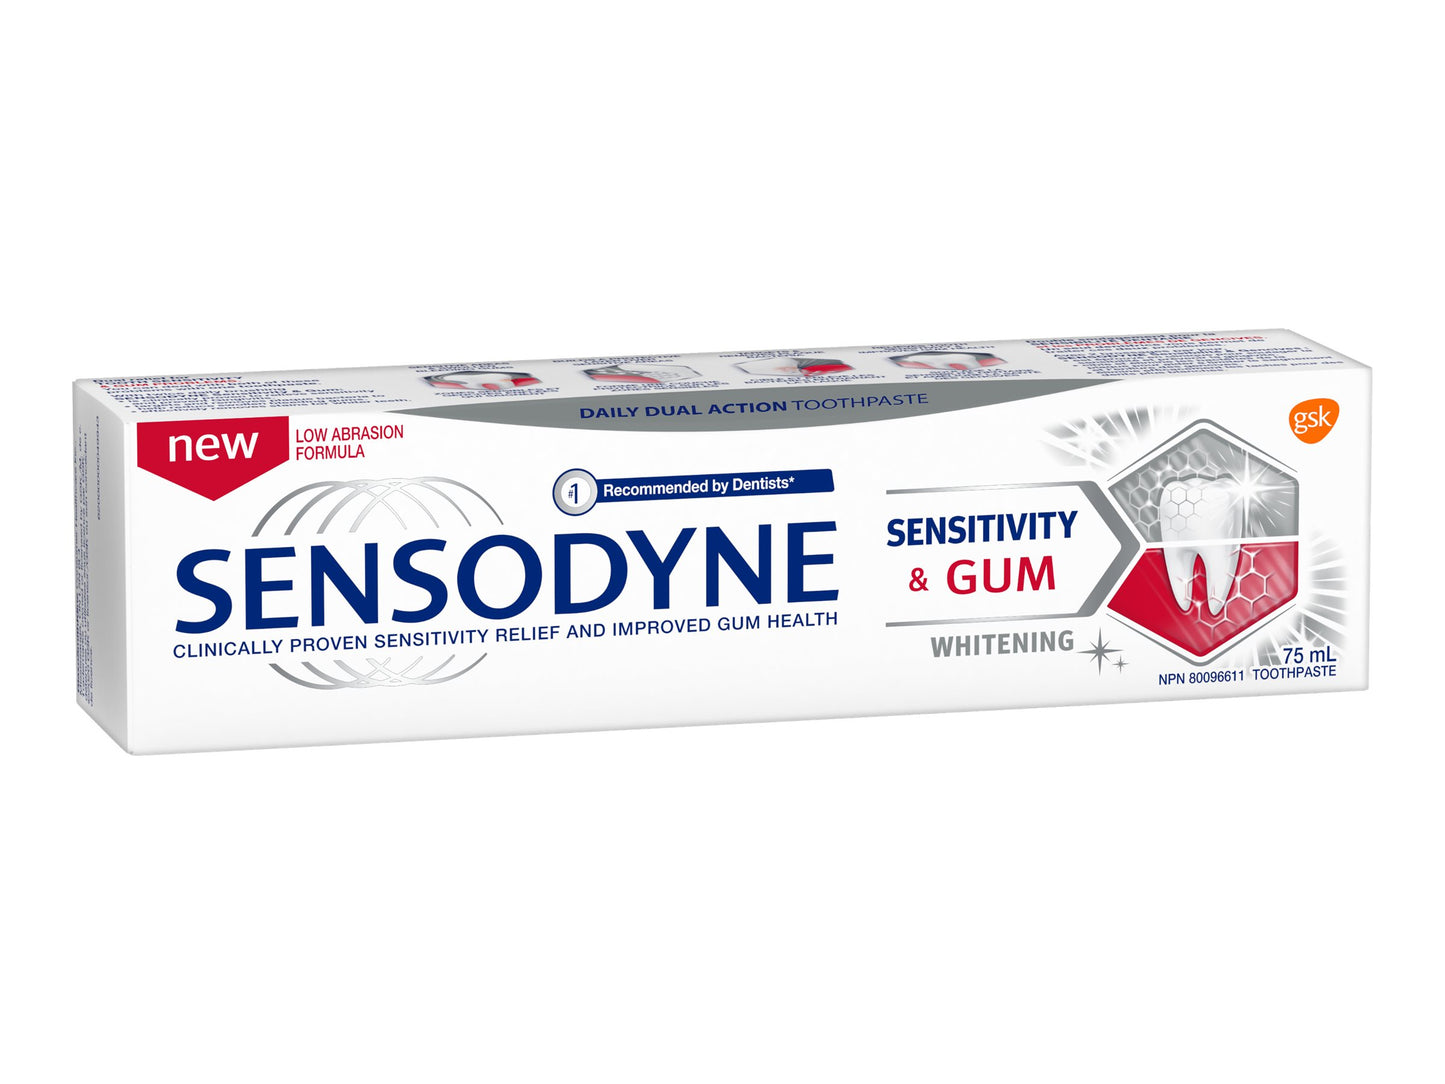 Sensodyne Sensitivity and Gum Whitening Toothpaste